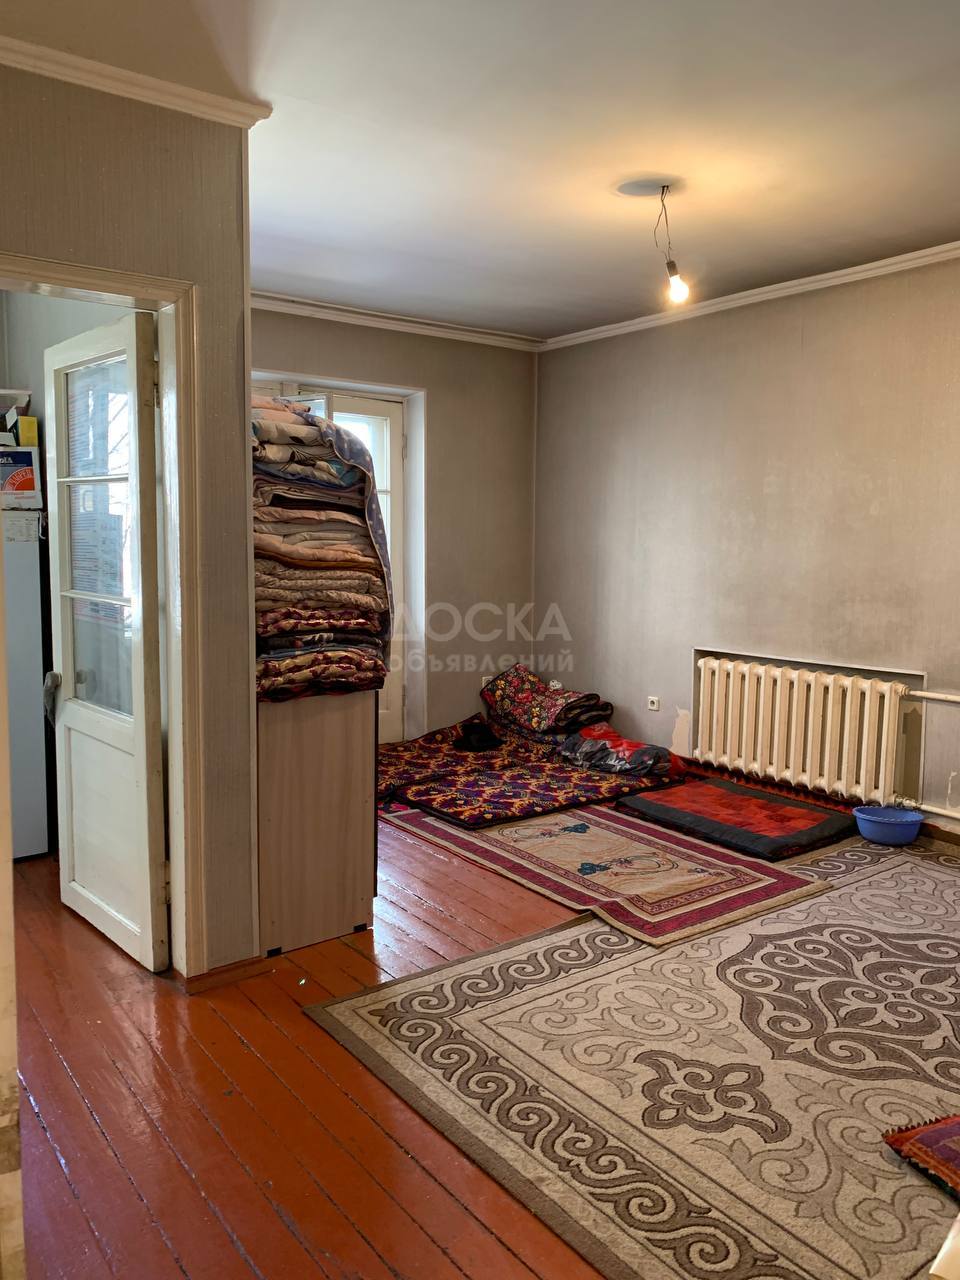 Продаю 1-комнатную квартиру, 30кв. м., этаж - 4/4, Чуй/Карпинка.